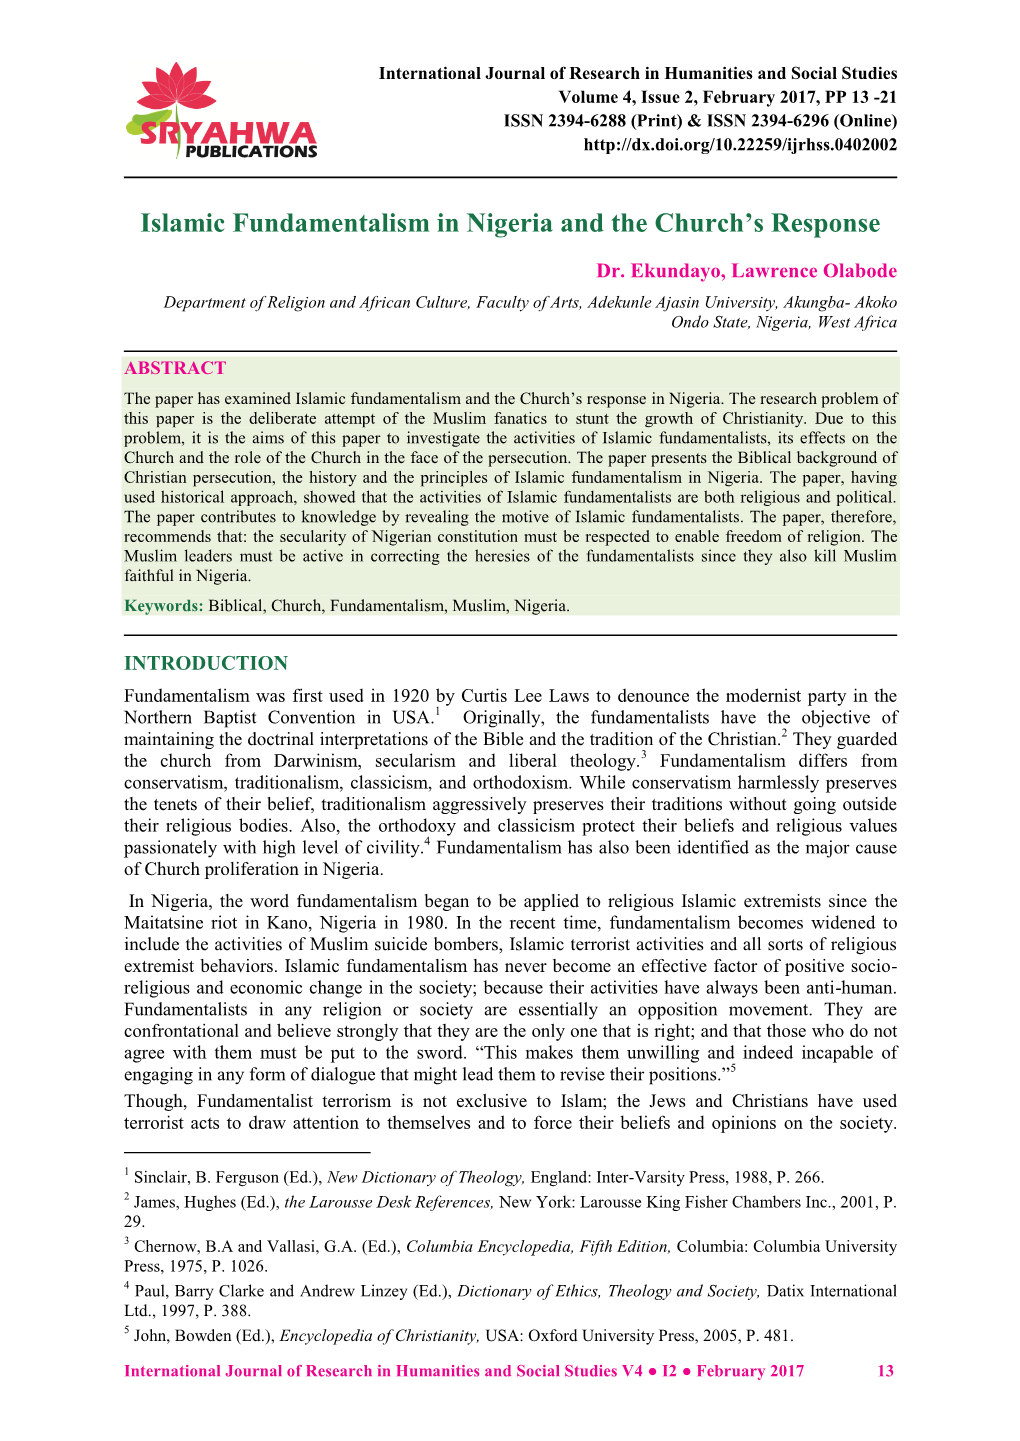 Islamic Fundamentalism in Nigeria and the Church's Response